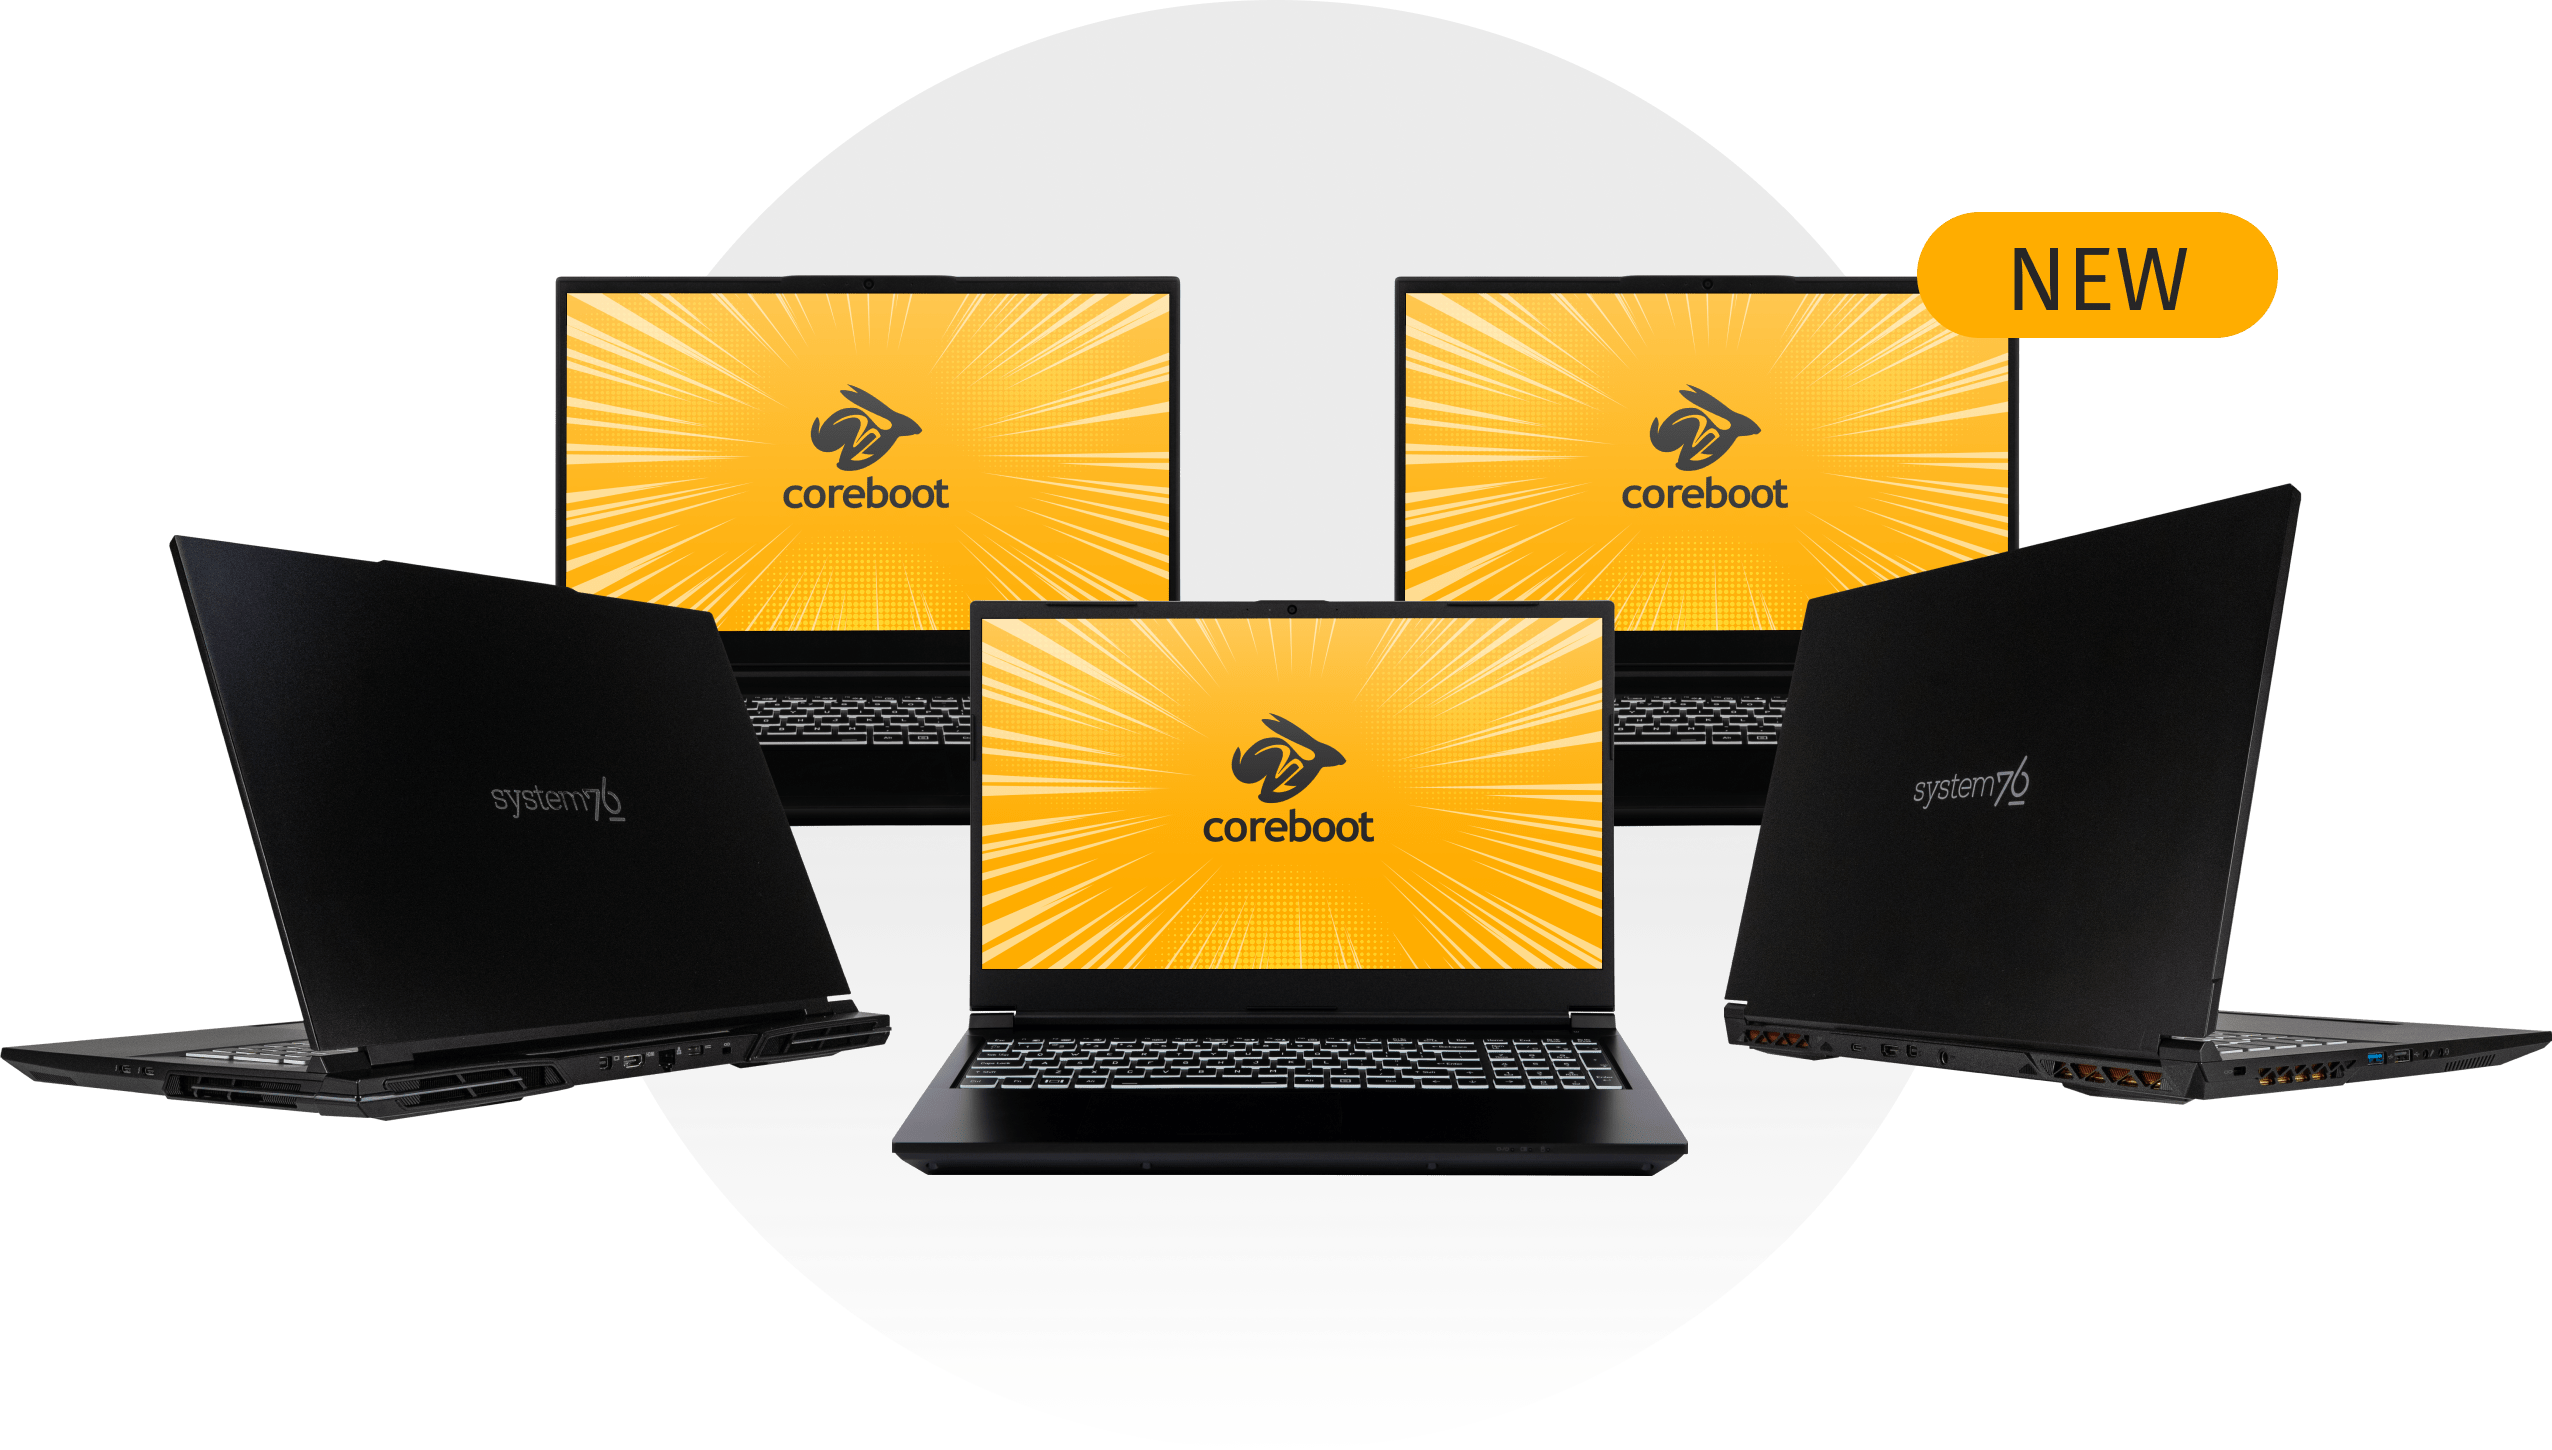 System76 - Laptops, Desktops, and Servers